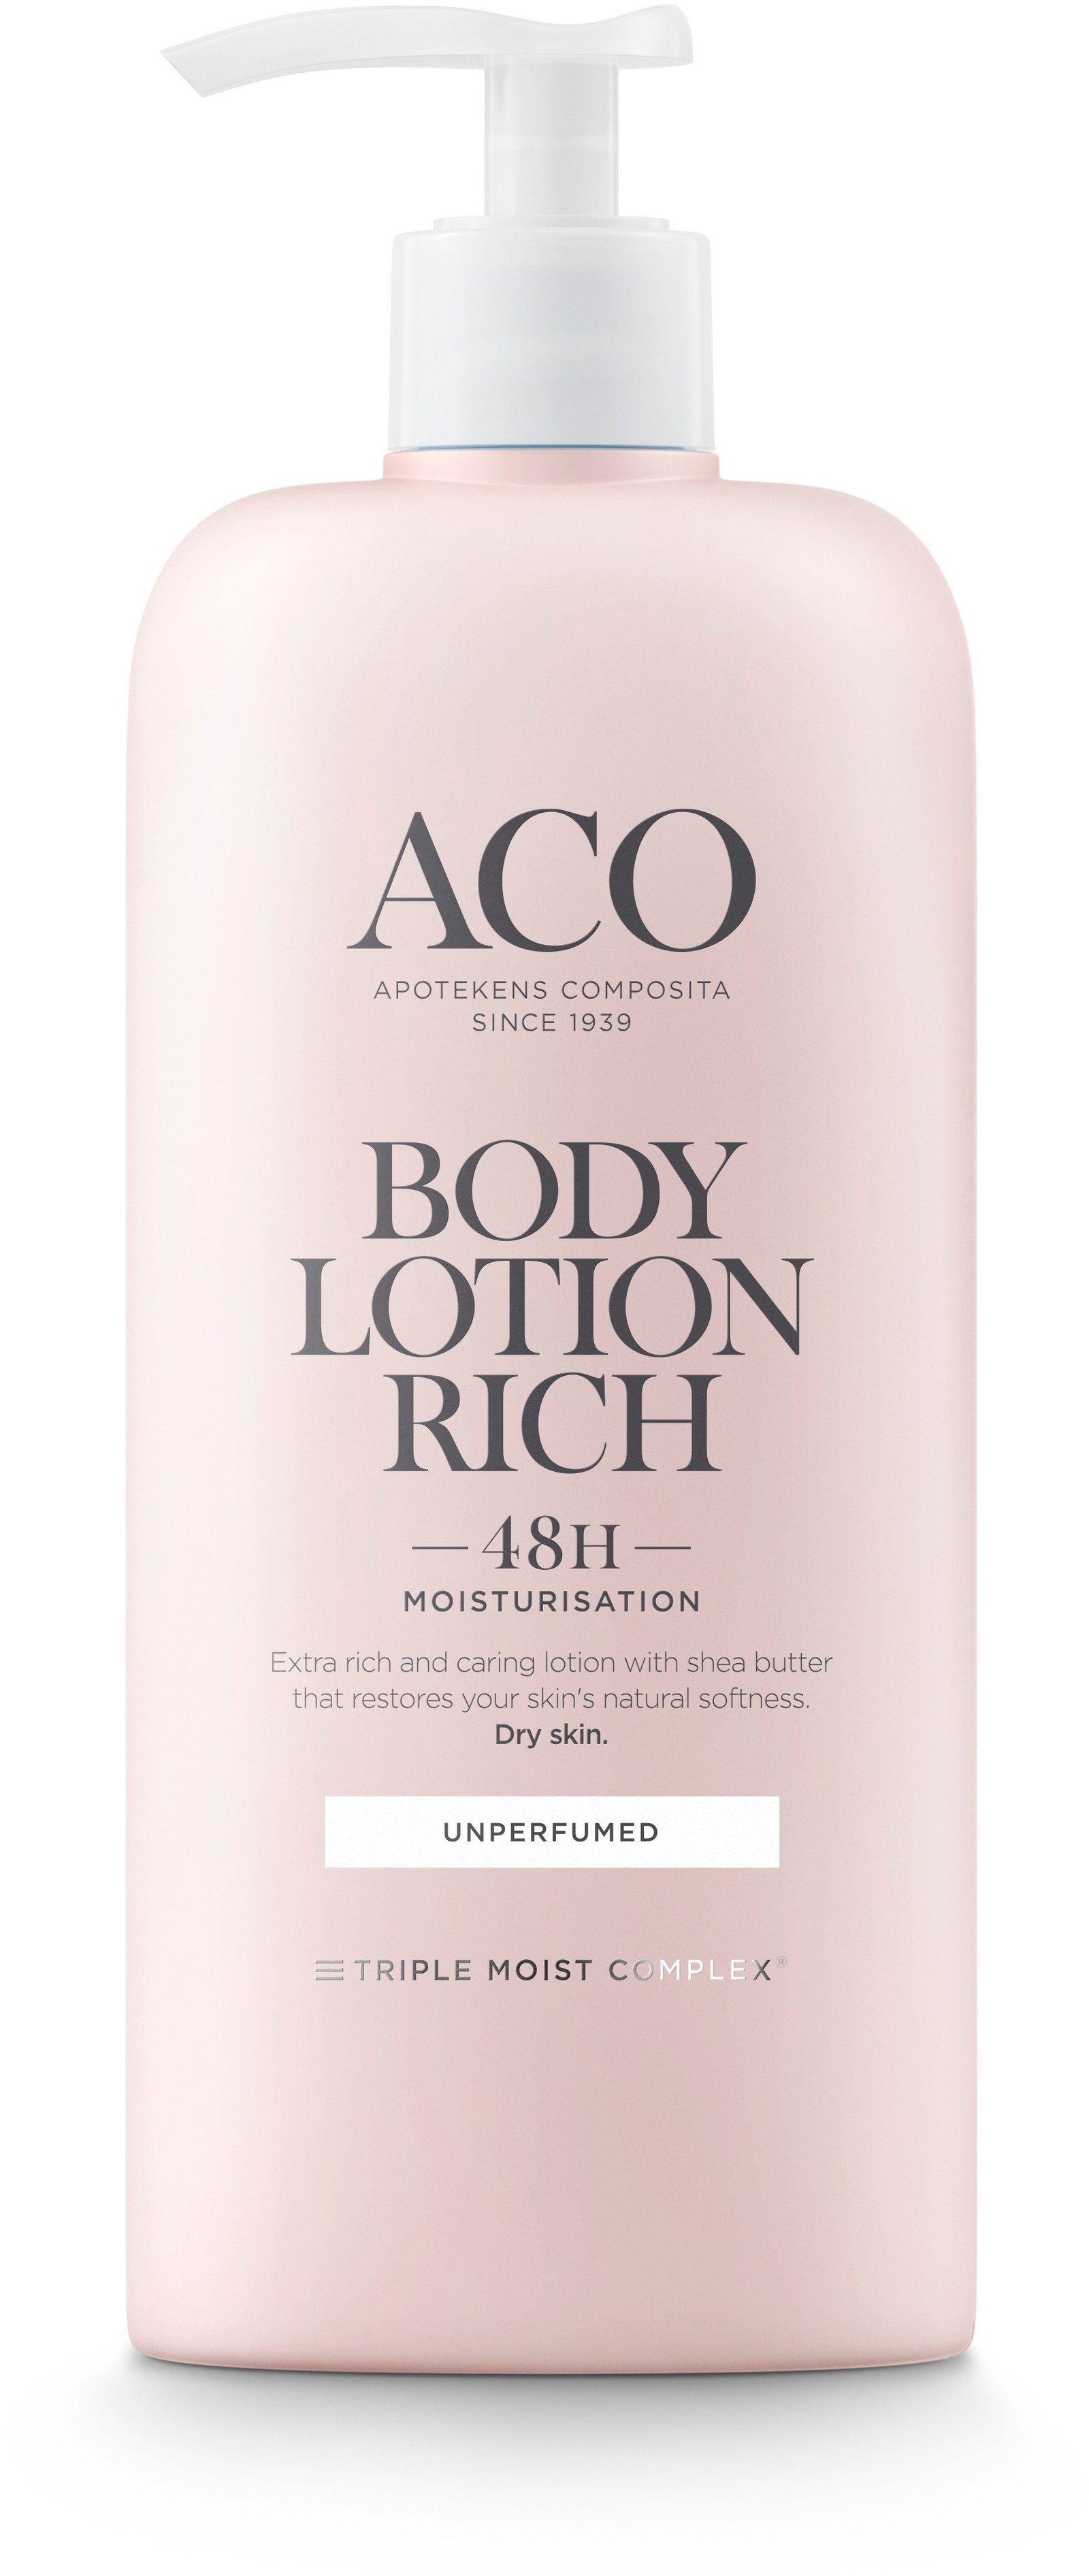 ACO Body Lotion Rich Kroppslotion Oparfymerad 400 ml